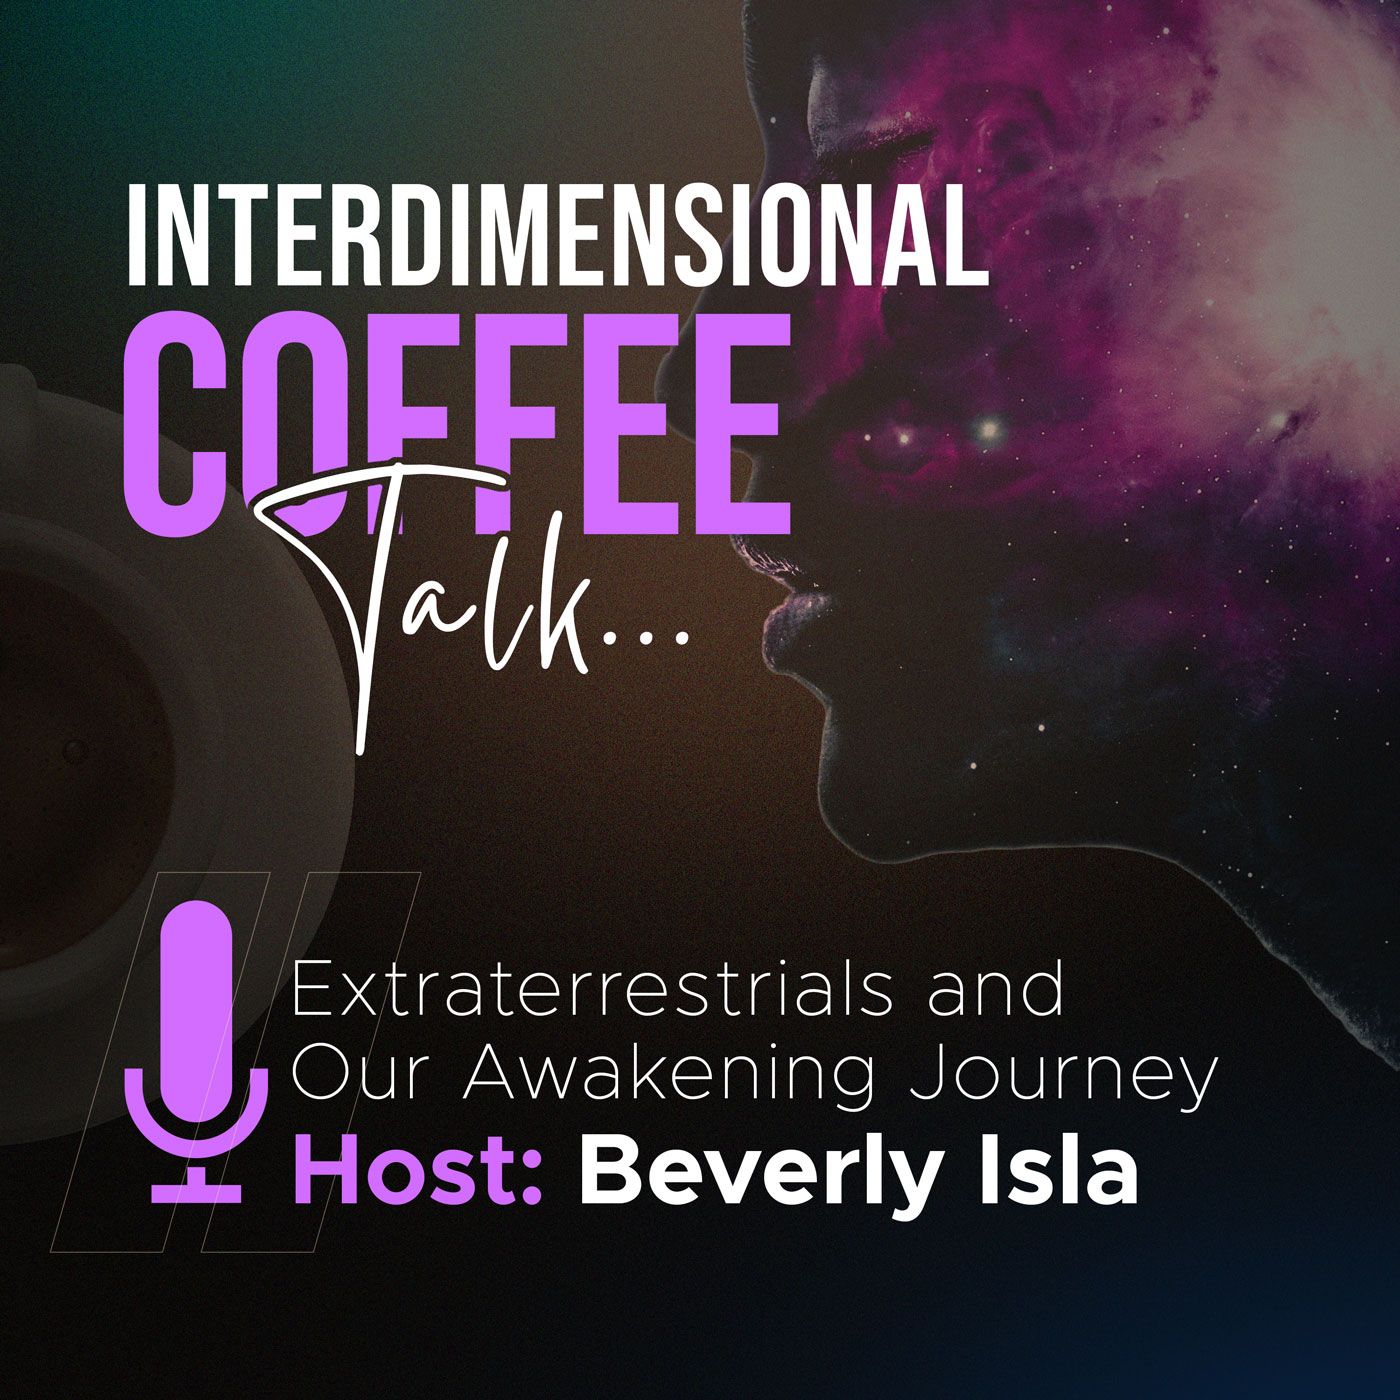 Interdimensional Coffee Talk Podcast